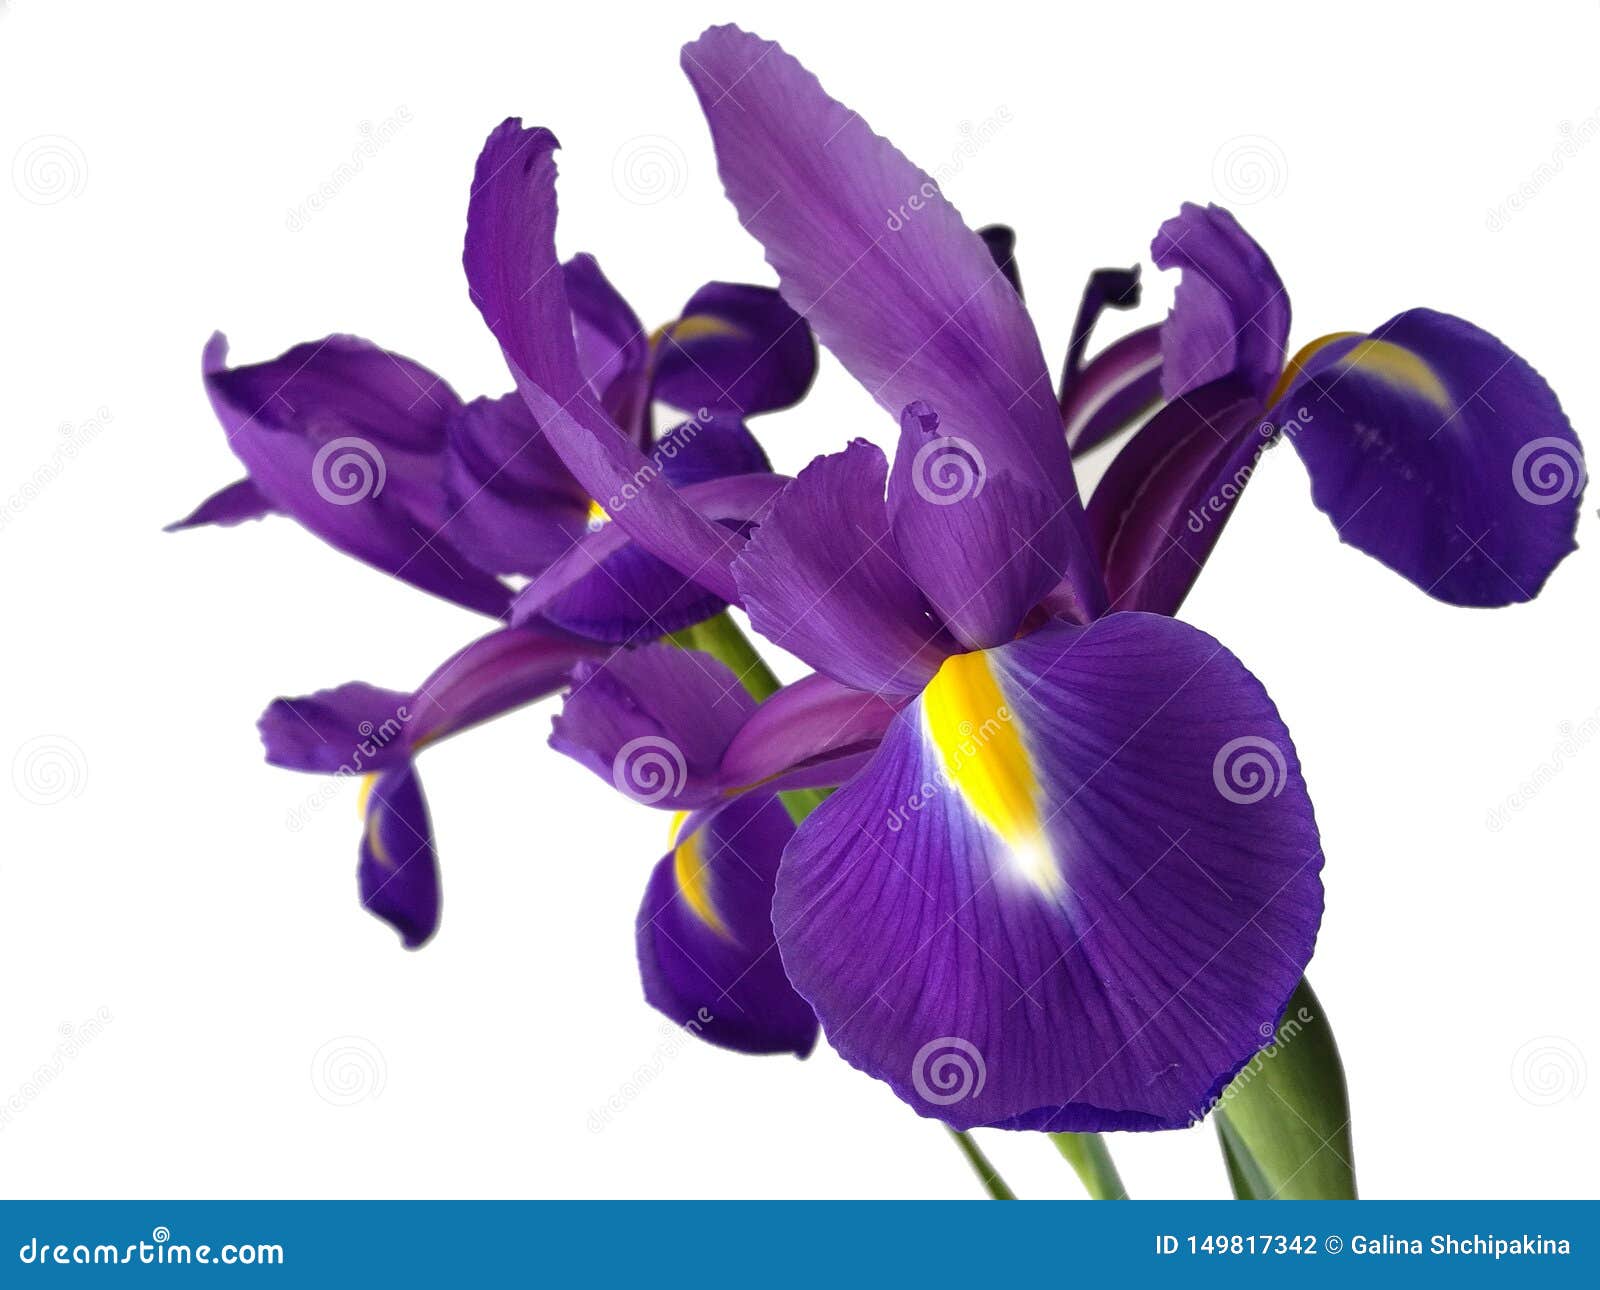 Purple Iris on White Background Stock Photo   Image of beauty ...